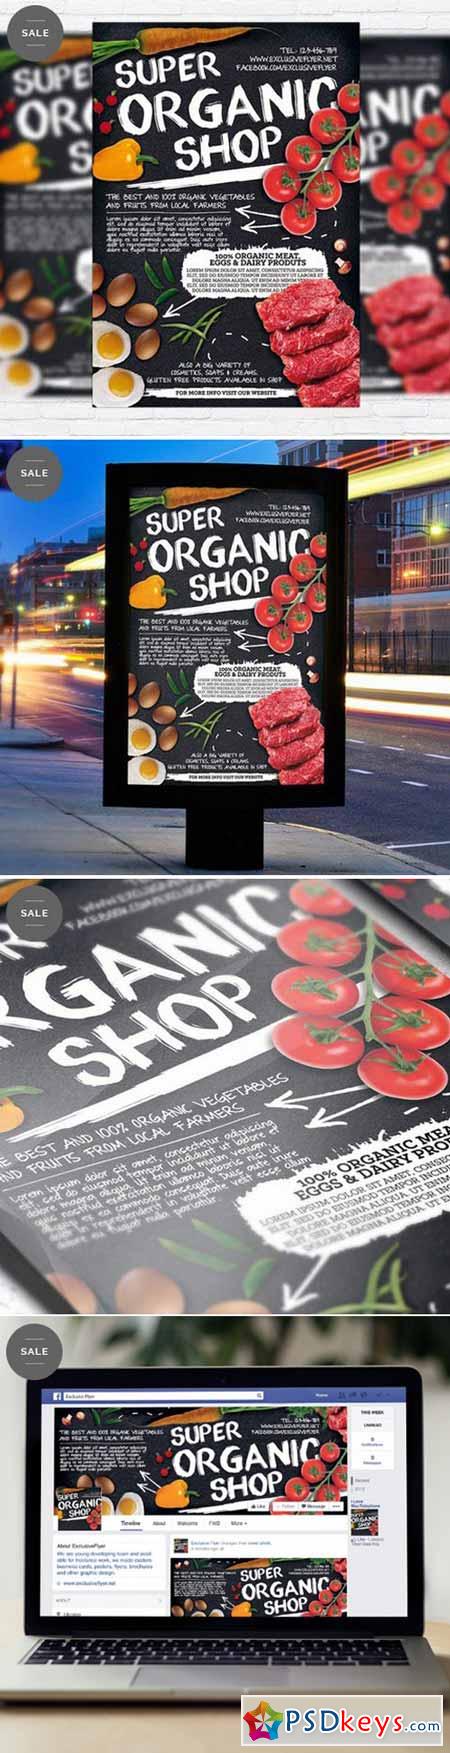 Organic Shop  Business Flyer Psd Template + Facebook Cover